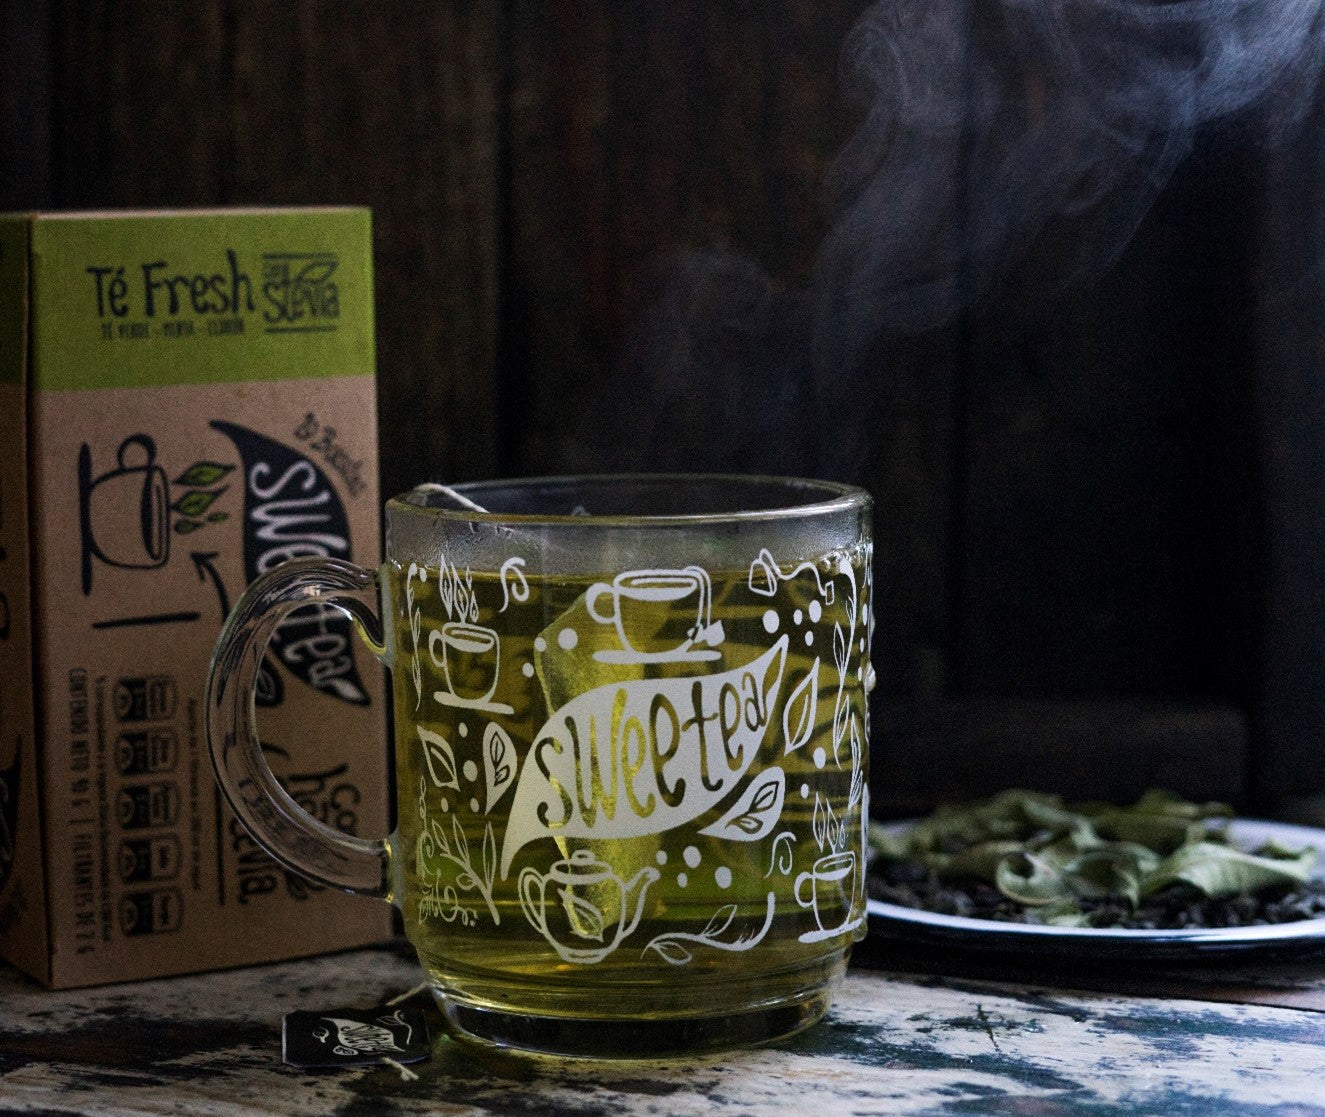 Descubre los Secretos Refrescantes del Té Fresh